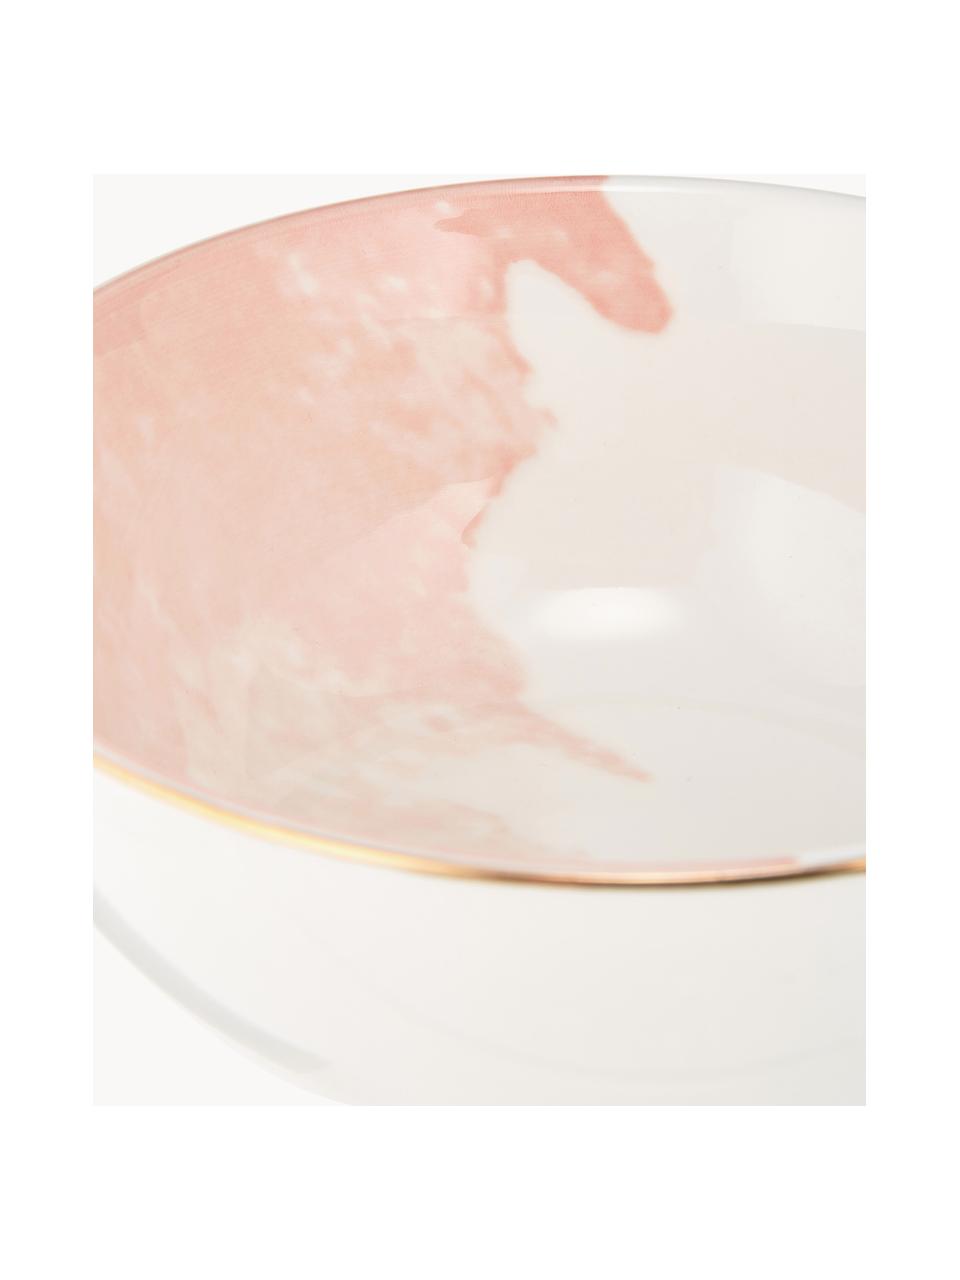 Porcelánová miska na müsli s abstraktním vzorem a se zlatým okrajem Rosie, 2 ks, Porcelán, Bílá, růžová, Ø 15 cm, V 6 cm